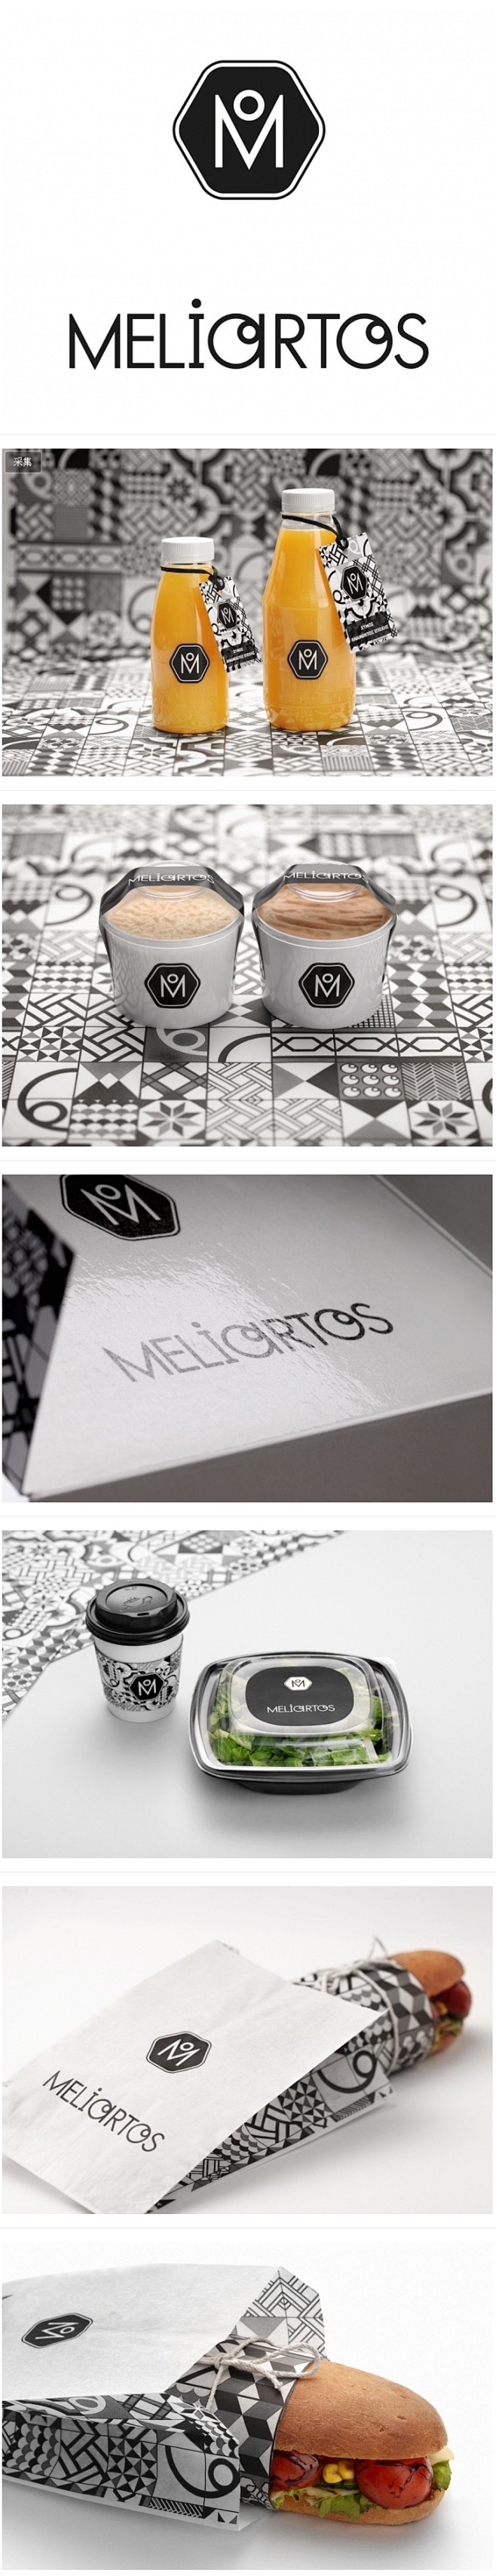 Meliartos面包店品牌+包装设计 ...